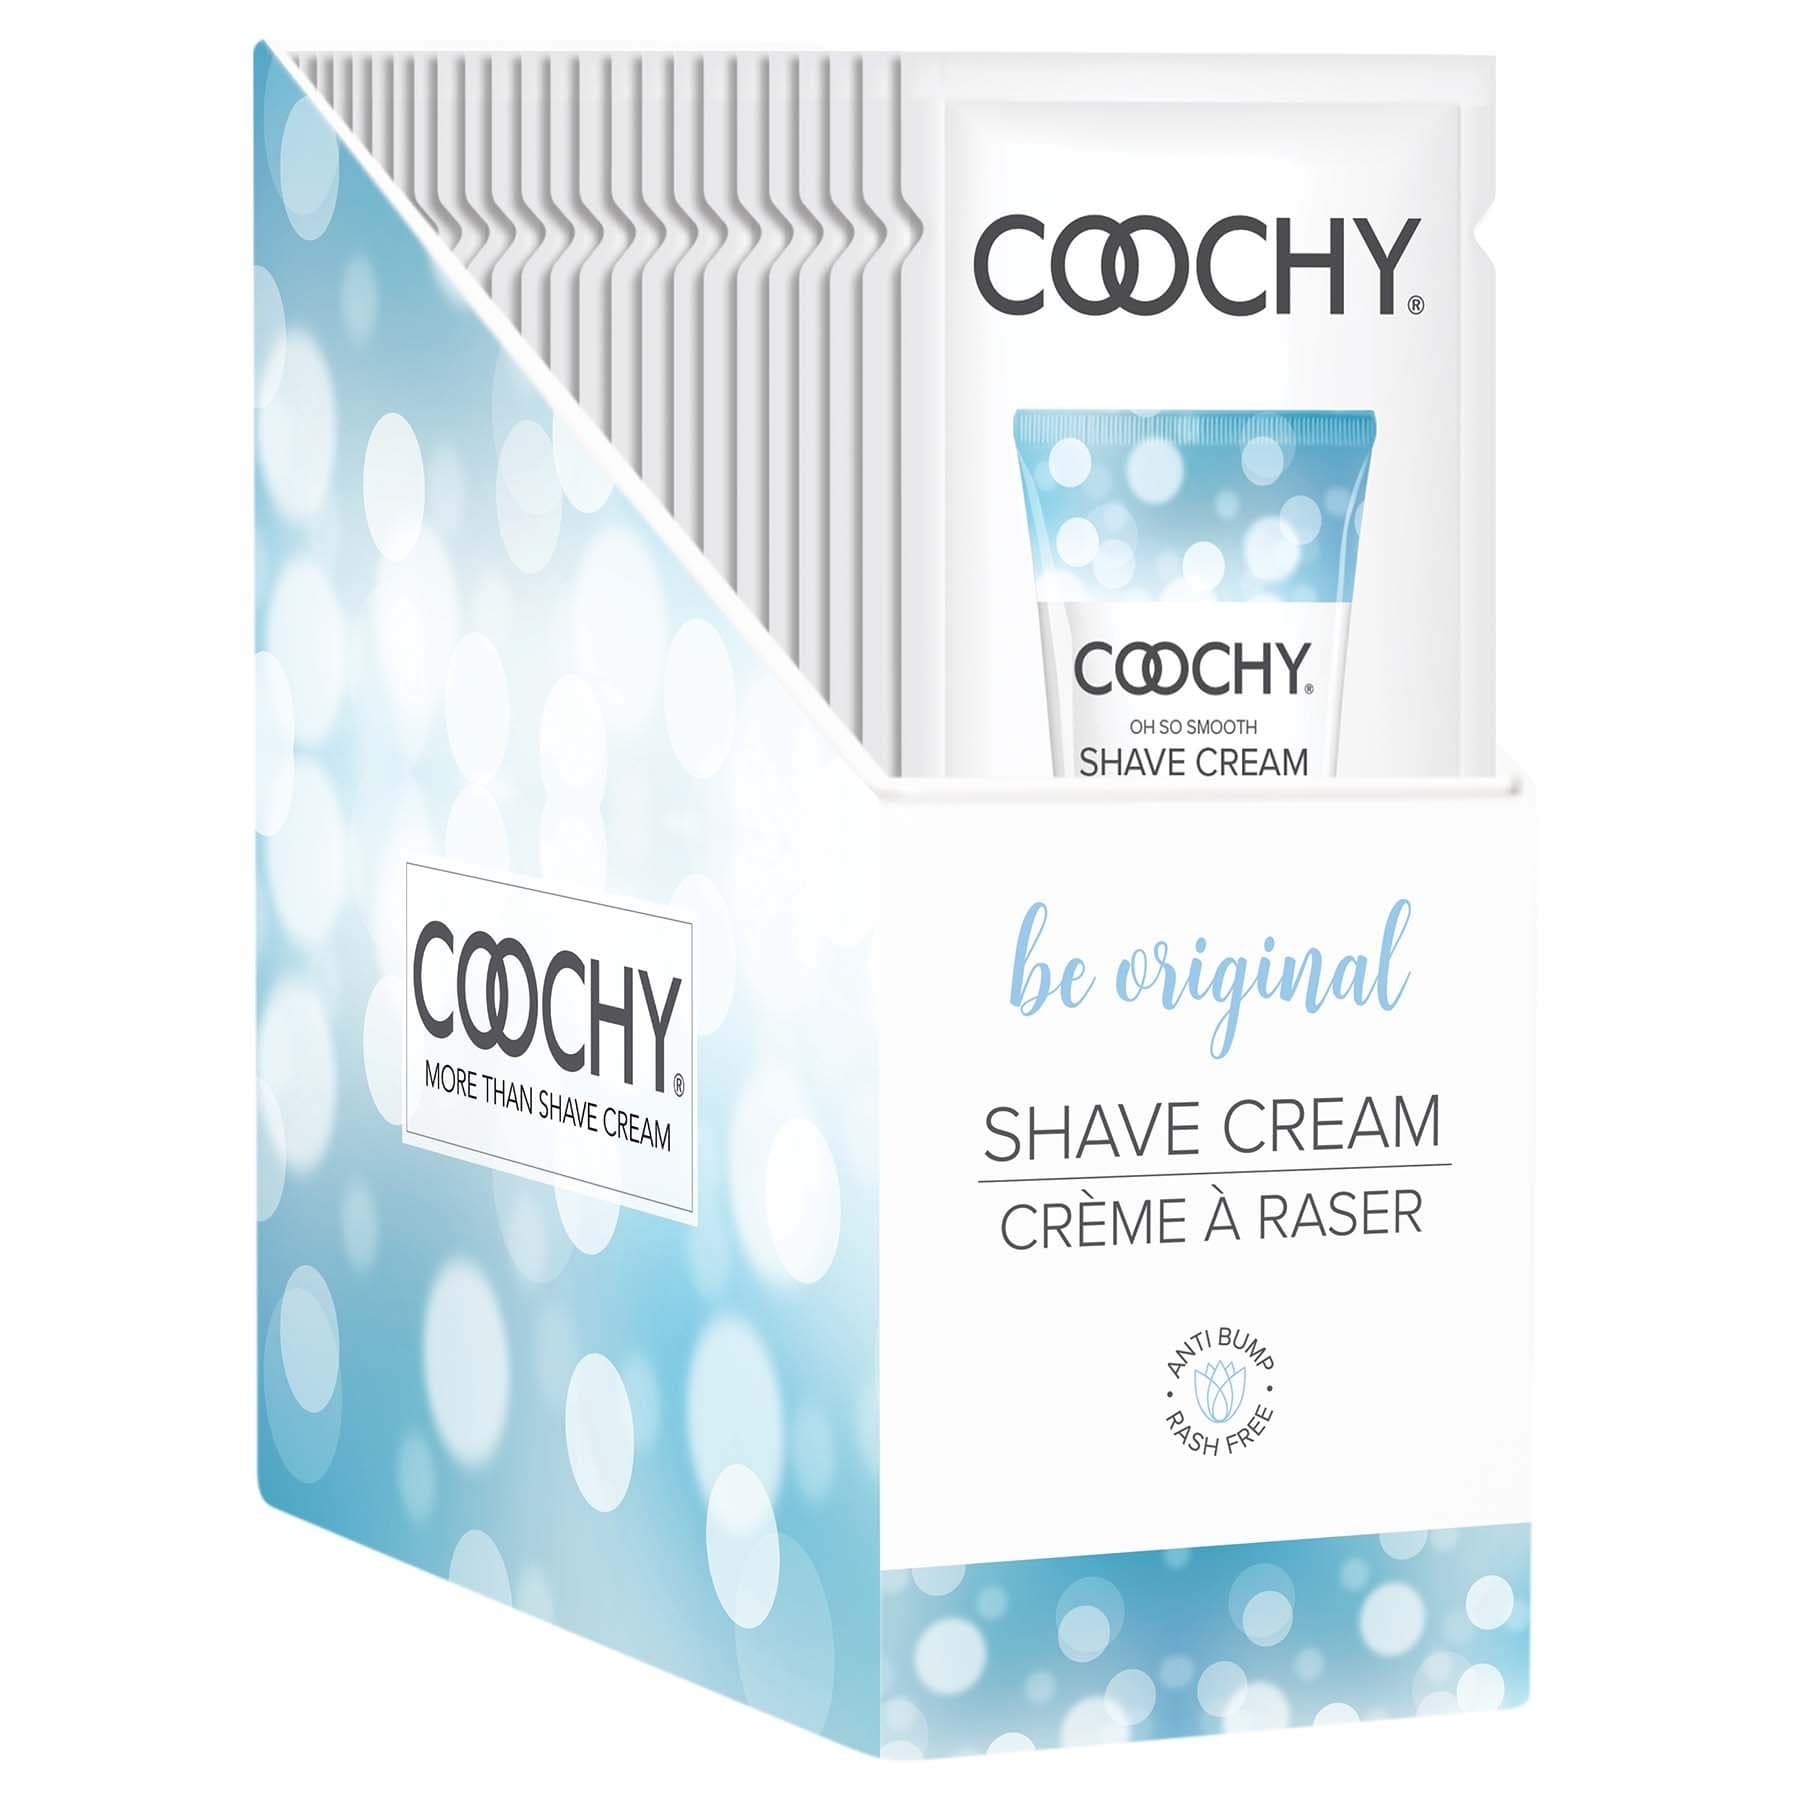 coochy shave cream be original 15 ml foils 24 count display